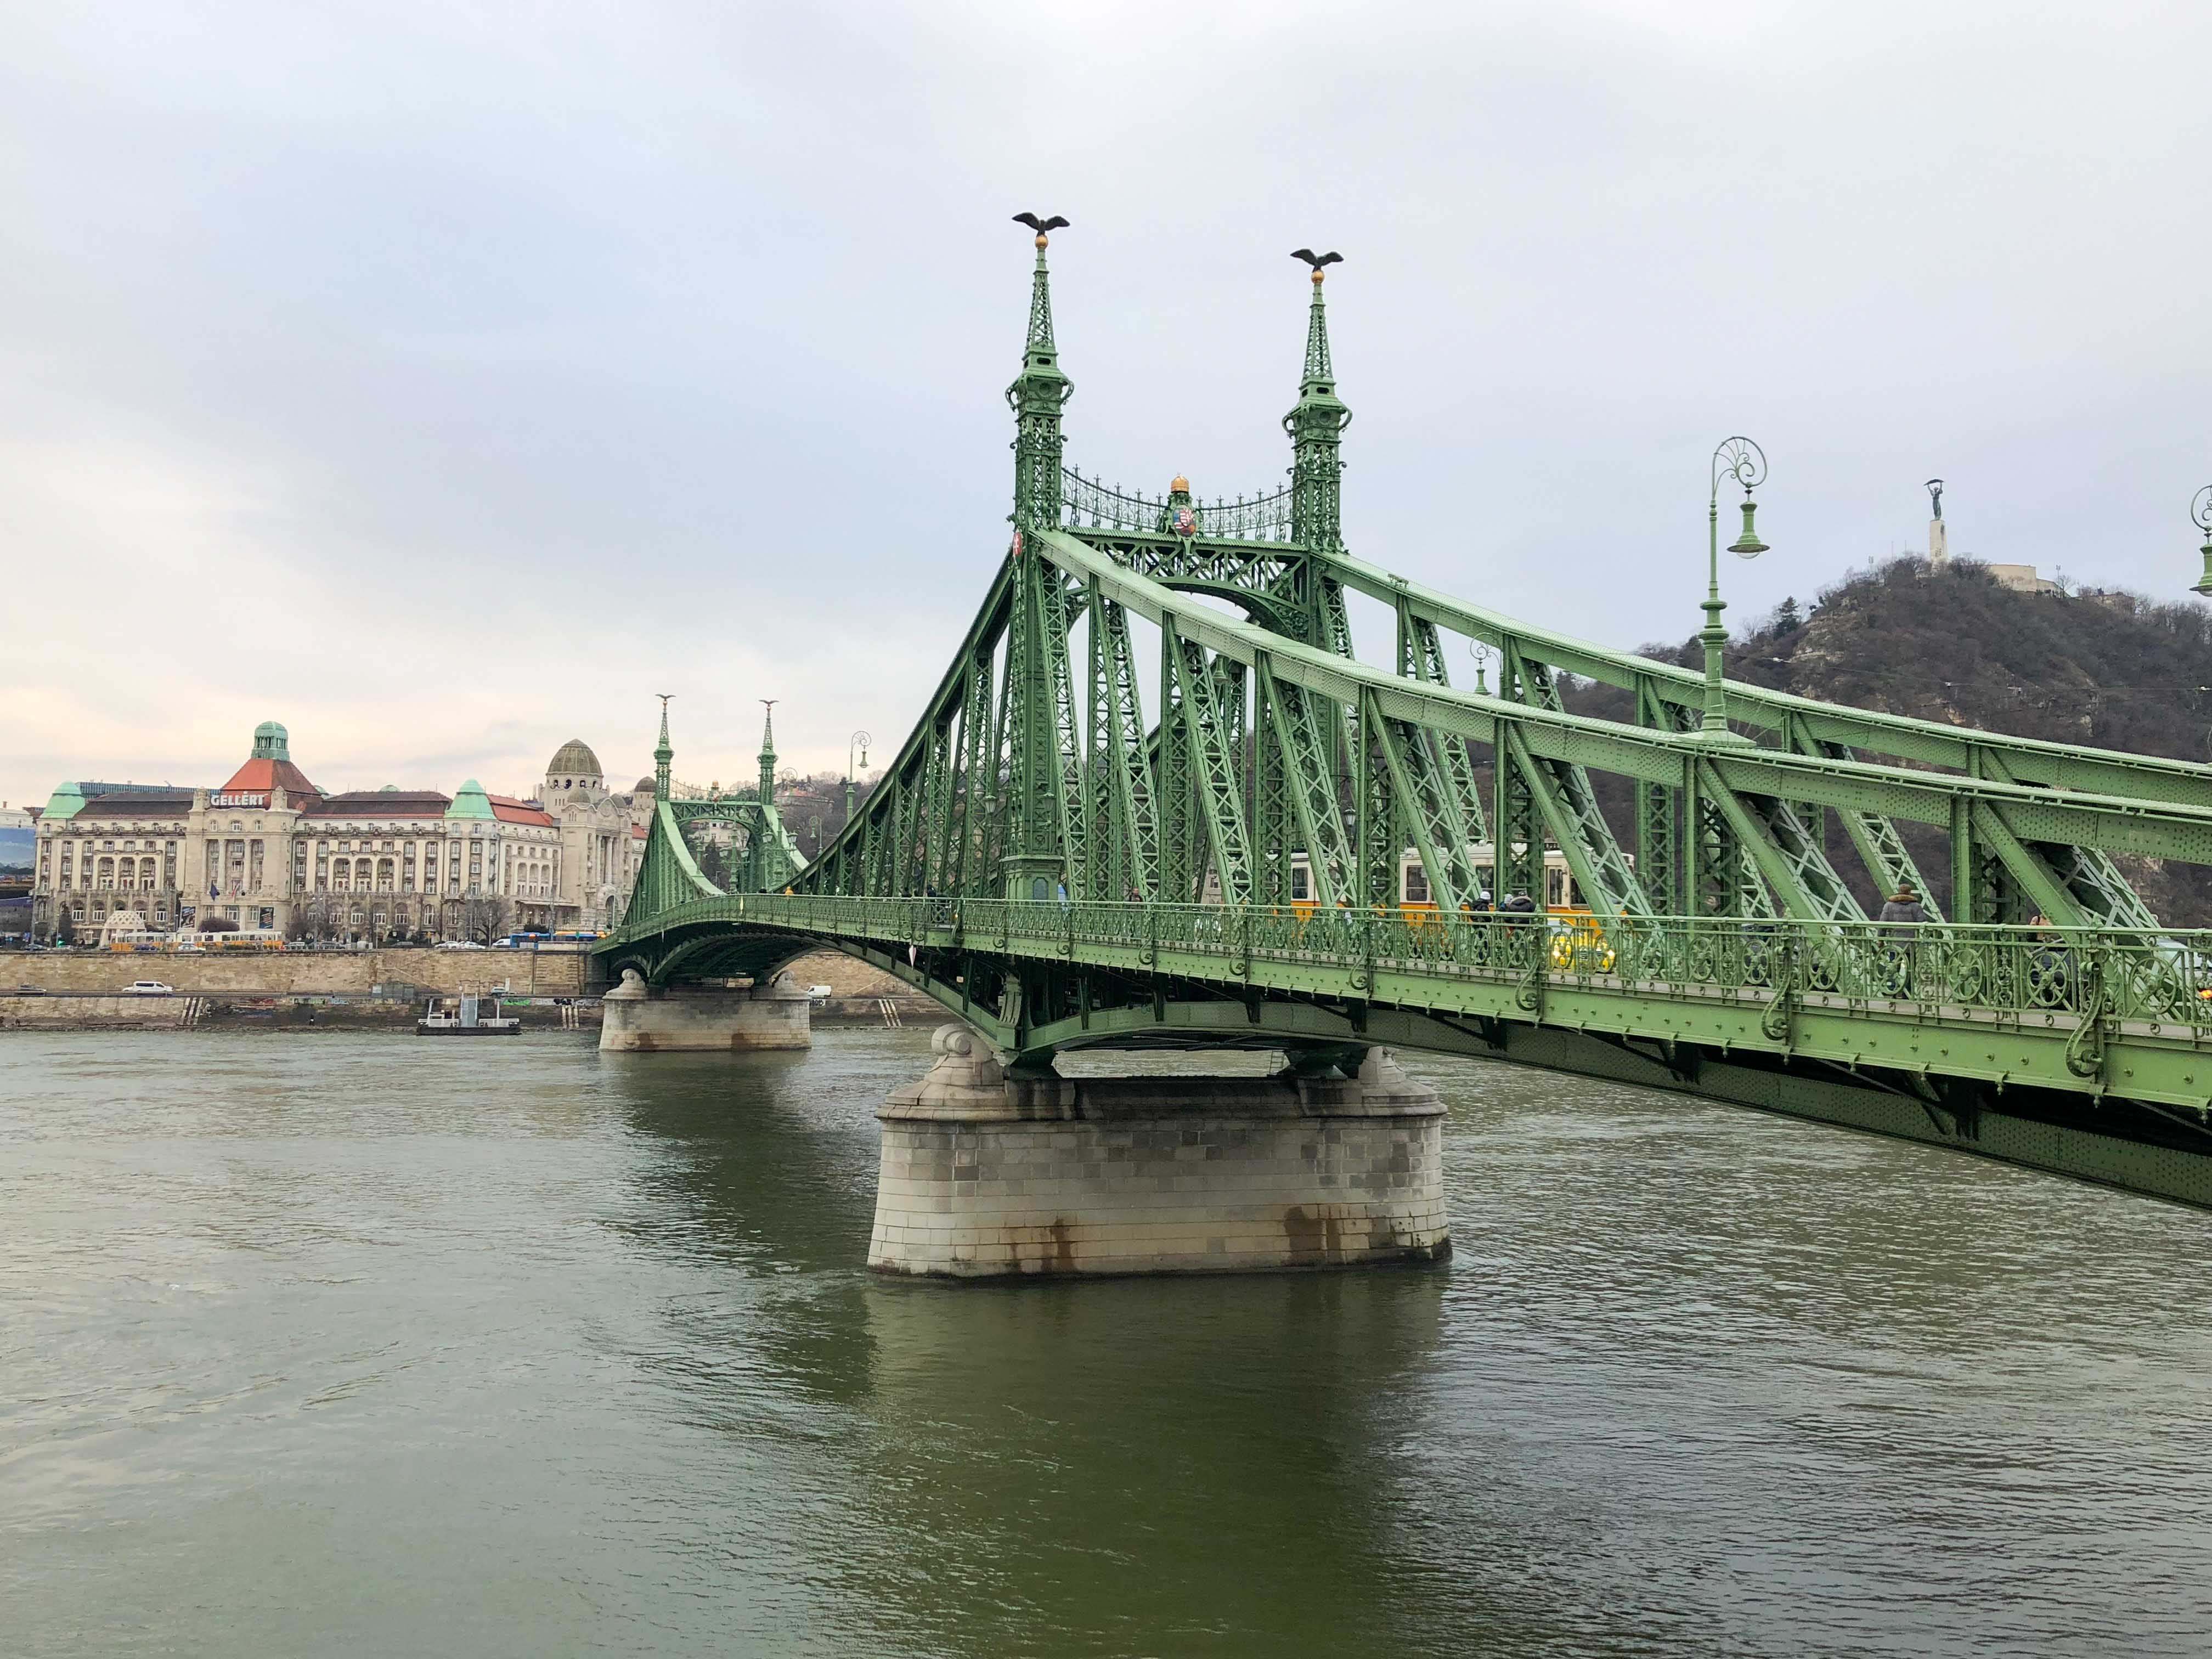 Traversée du Danube via le Liberty Bridge